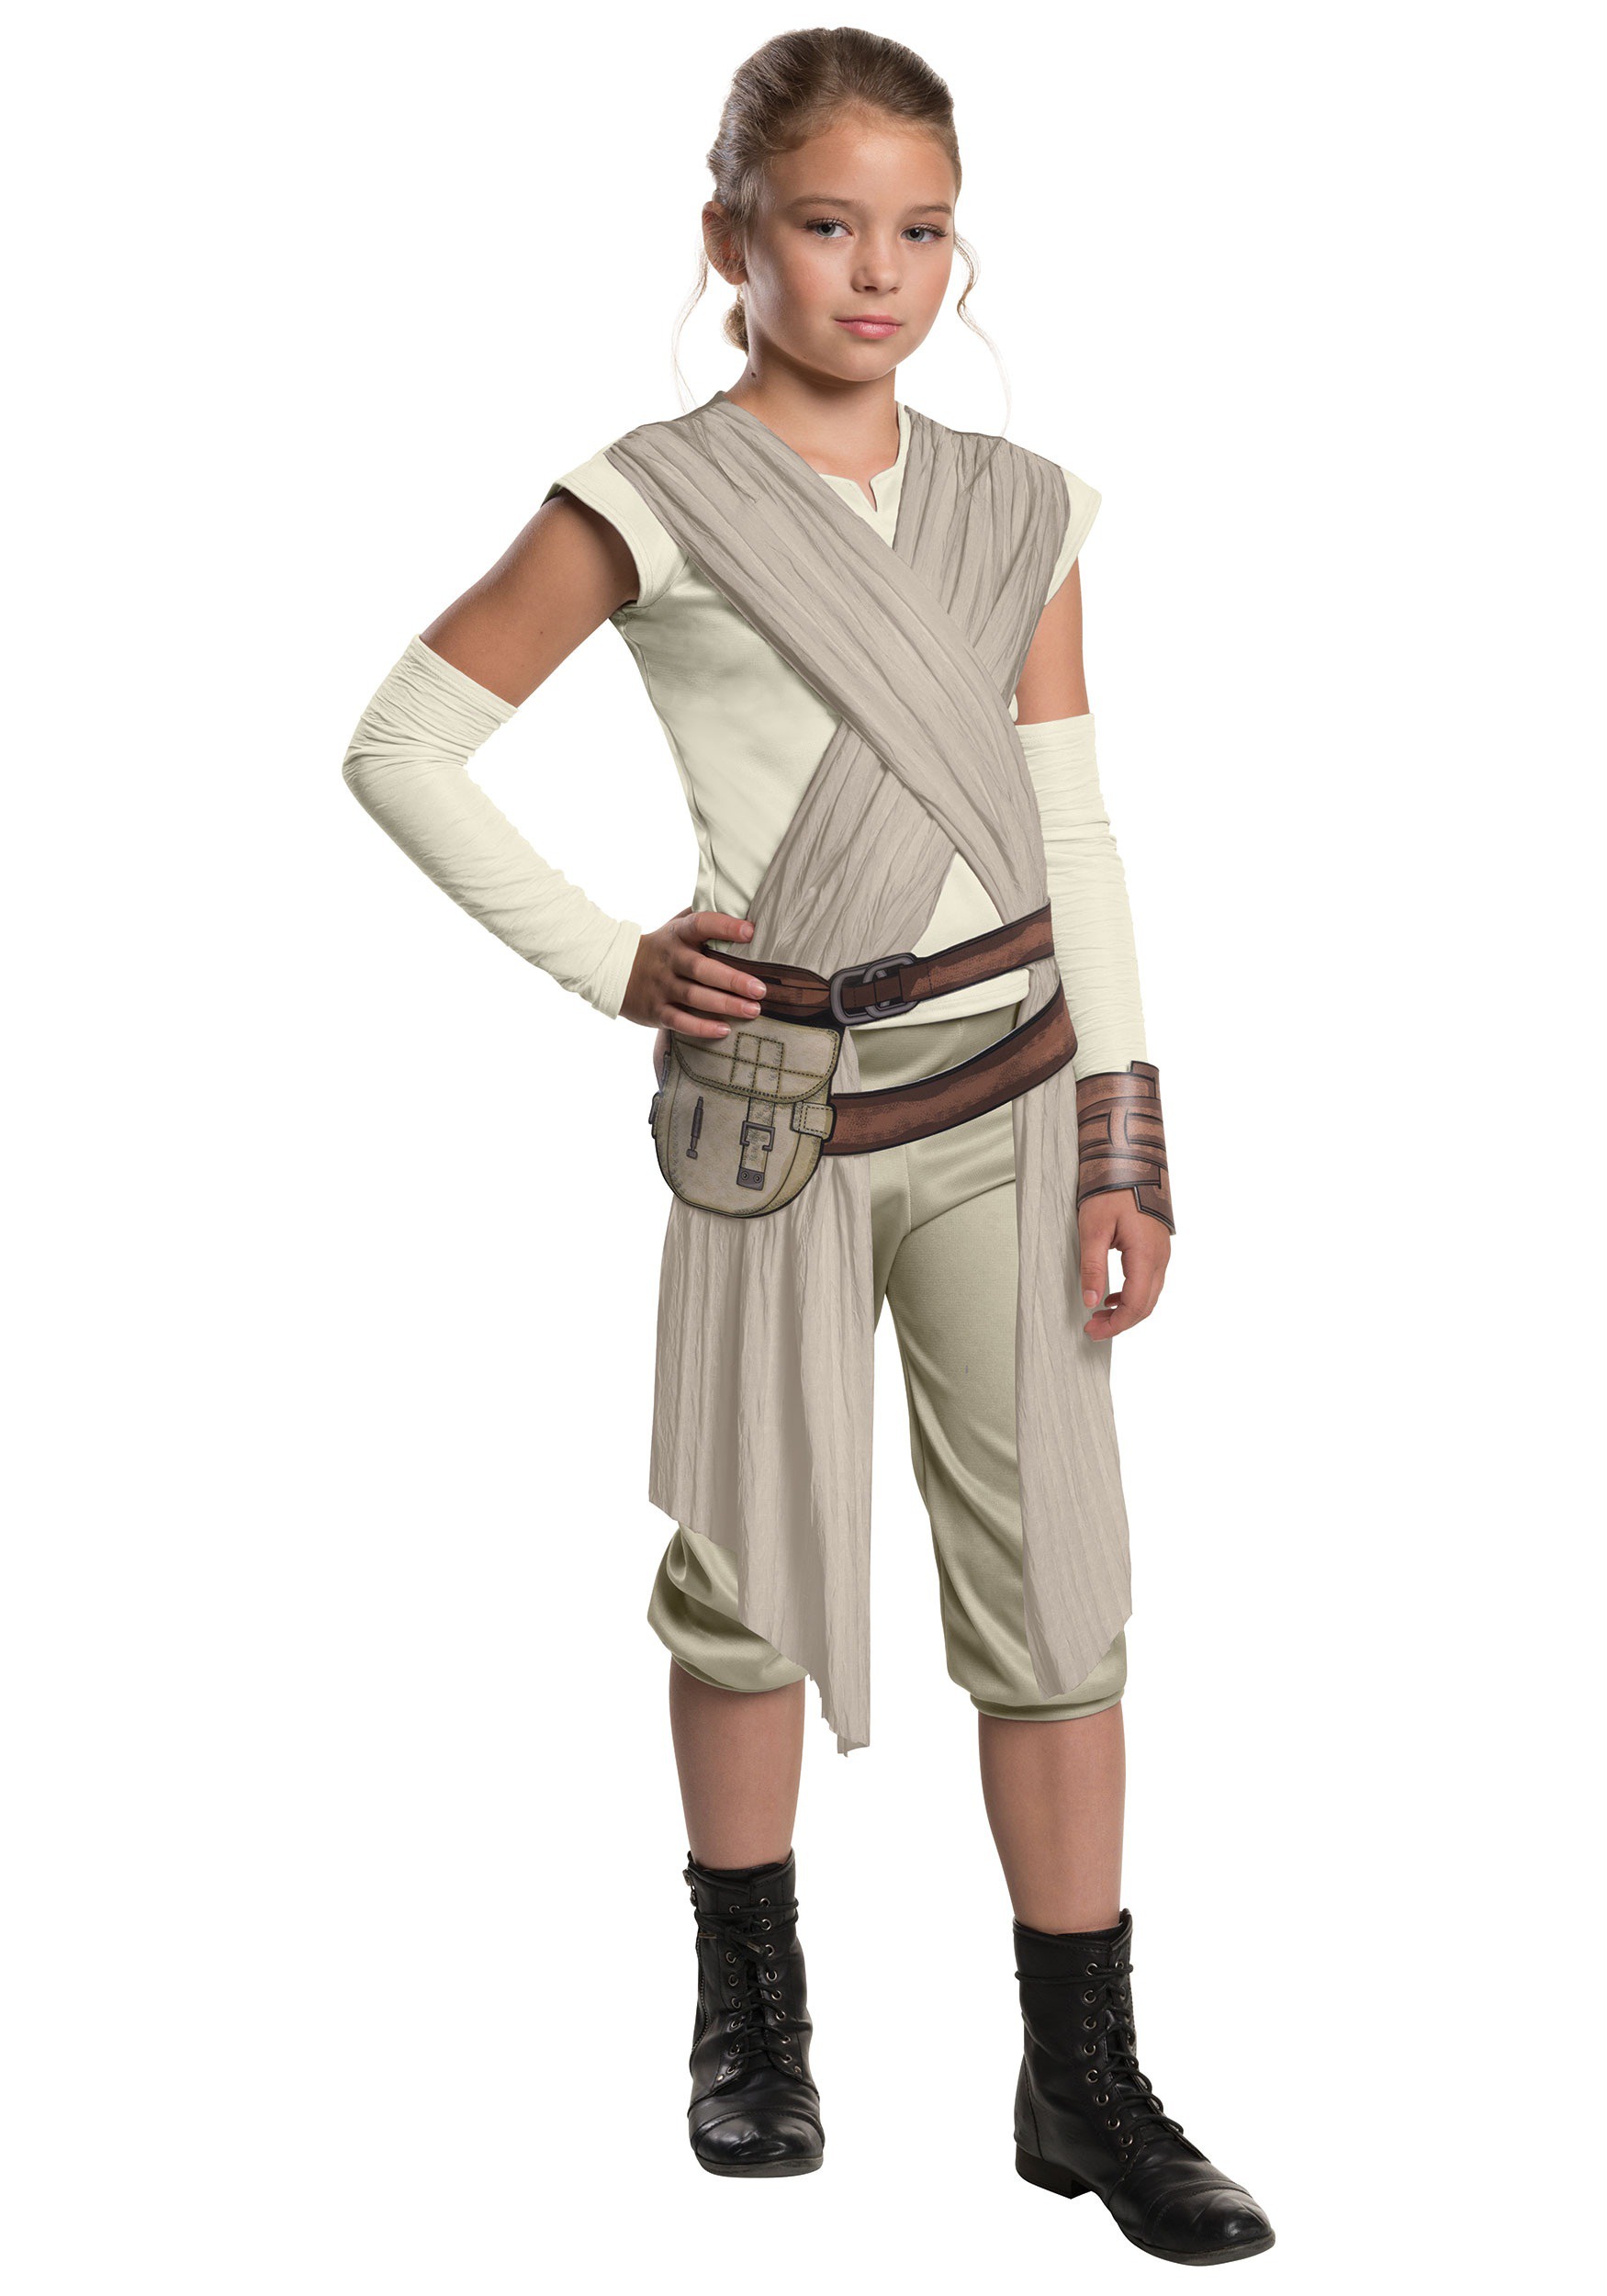 Deluxe Kids Rey Costume from Star Wars Episode 7